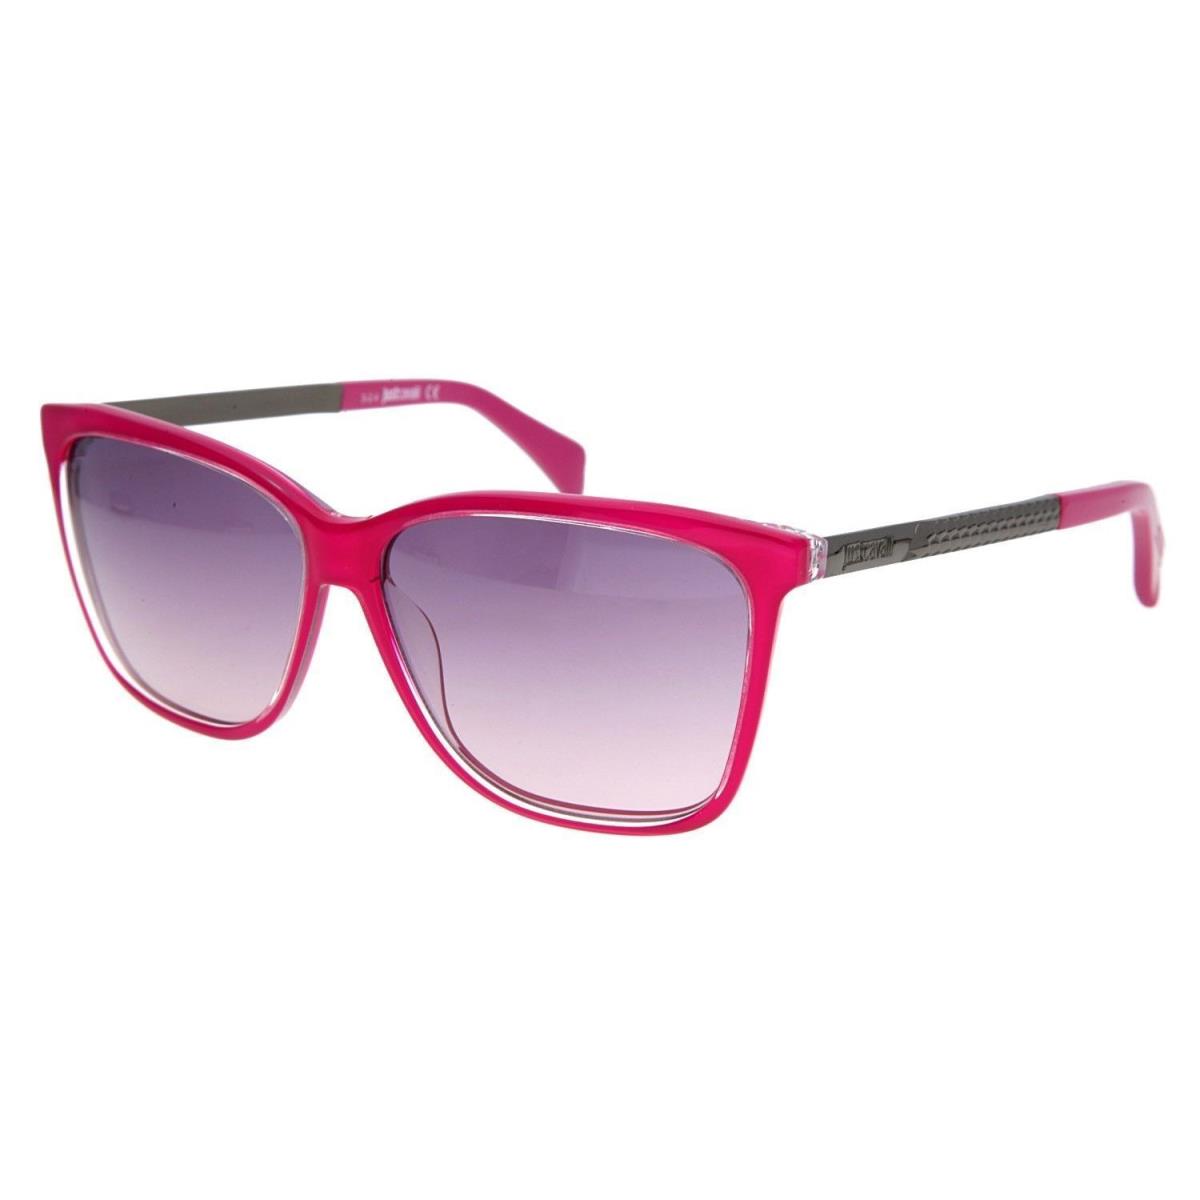 Just Cavalli Women Sunglasses JC652S-75B Pink/dark Grey